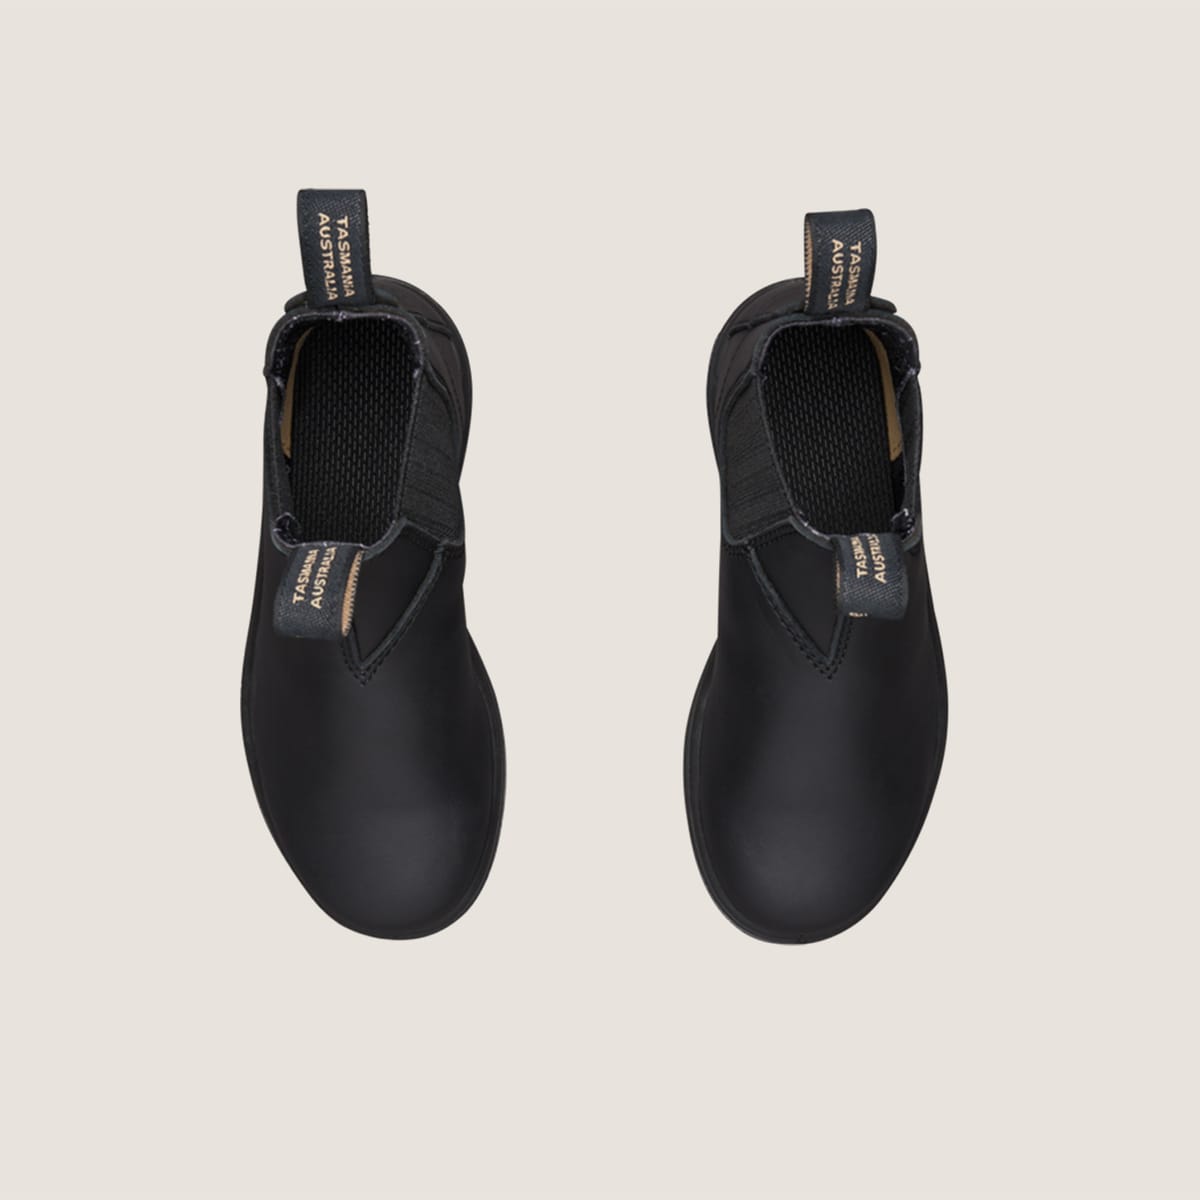 Childs Black Premium Leather Elastic Side Boot